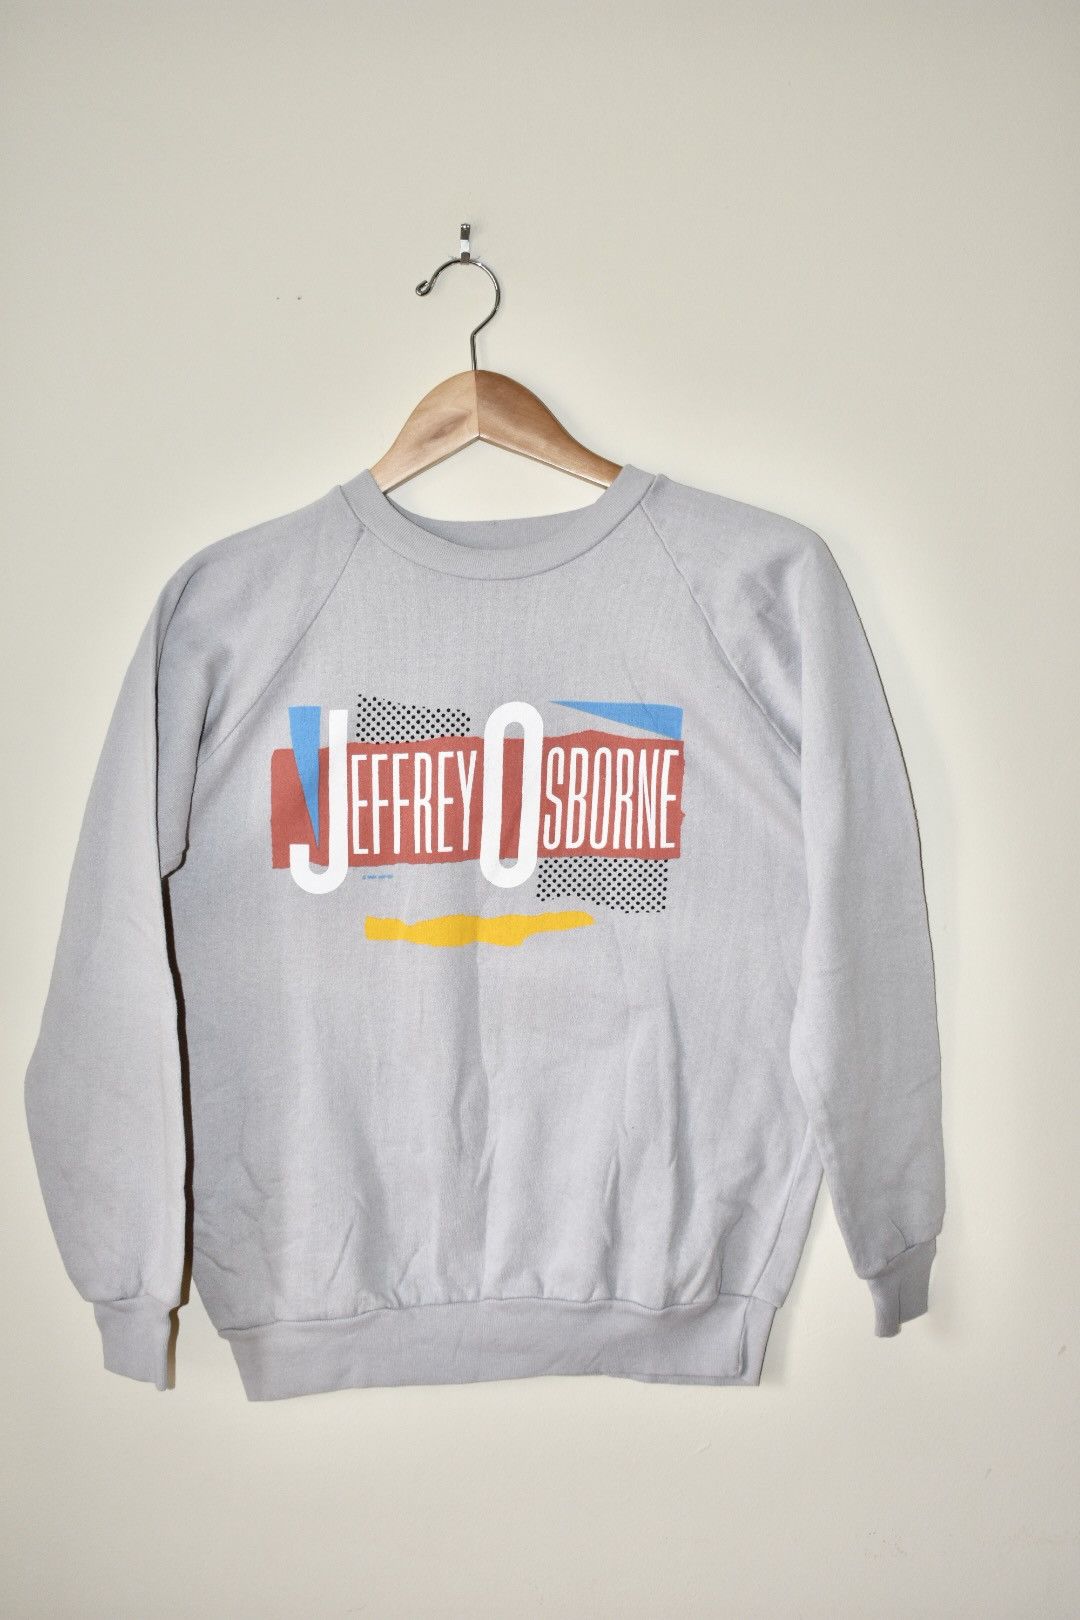 Vintage 1984/85 Jeffrey Osborn Sweatshirt - Don't Stop | Grailed